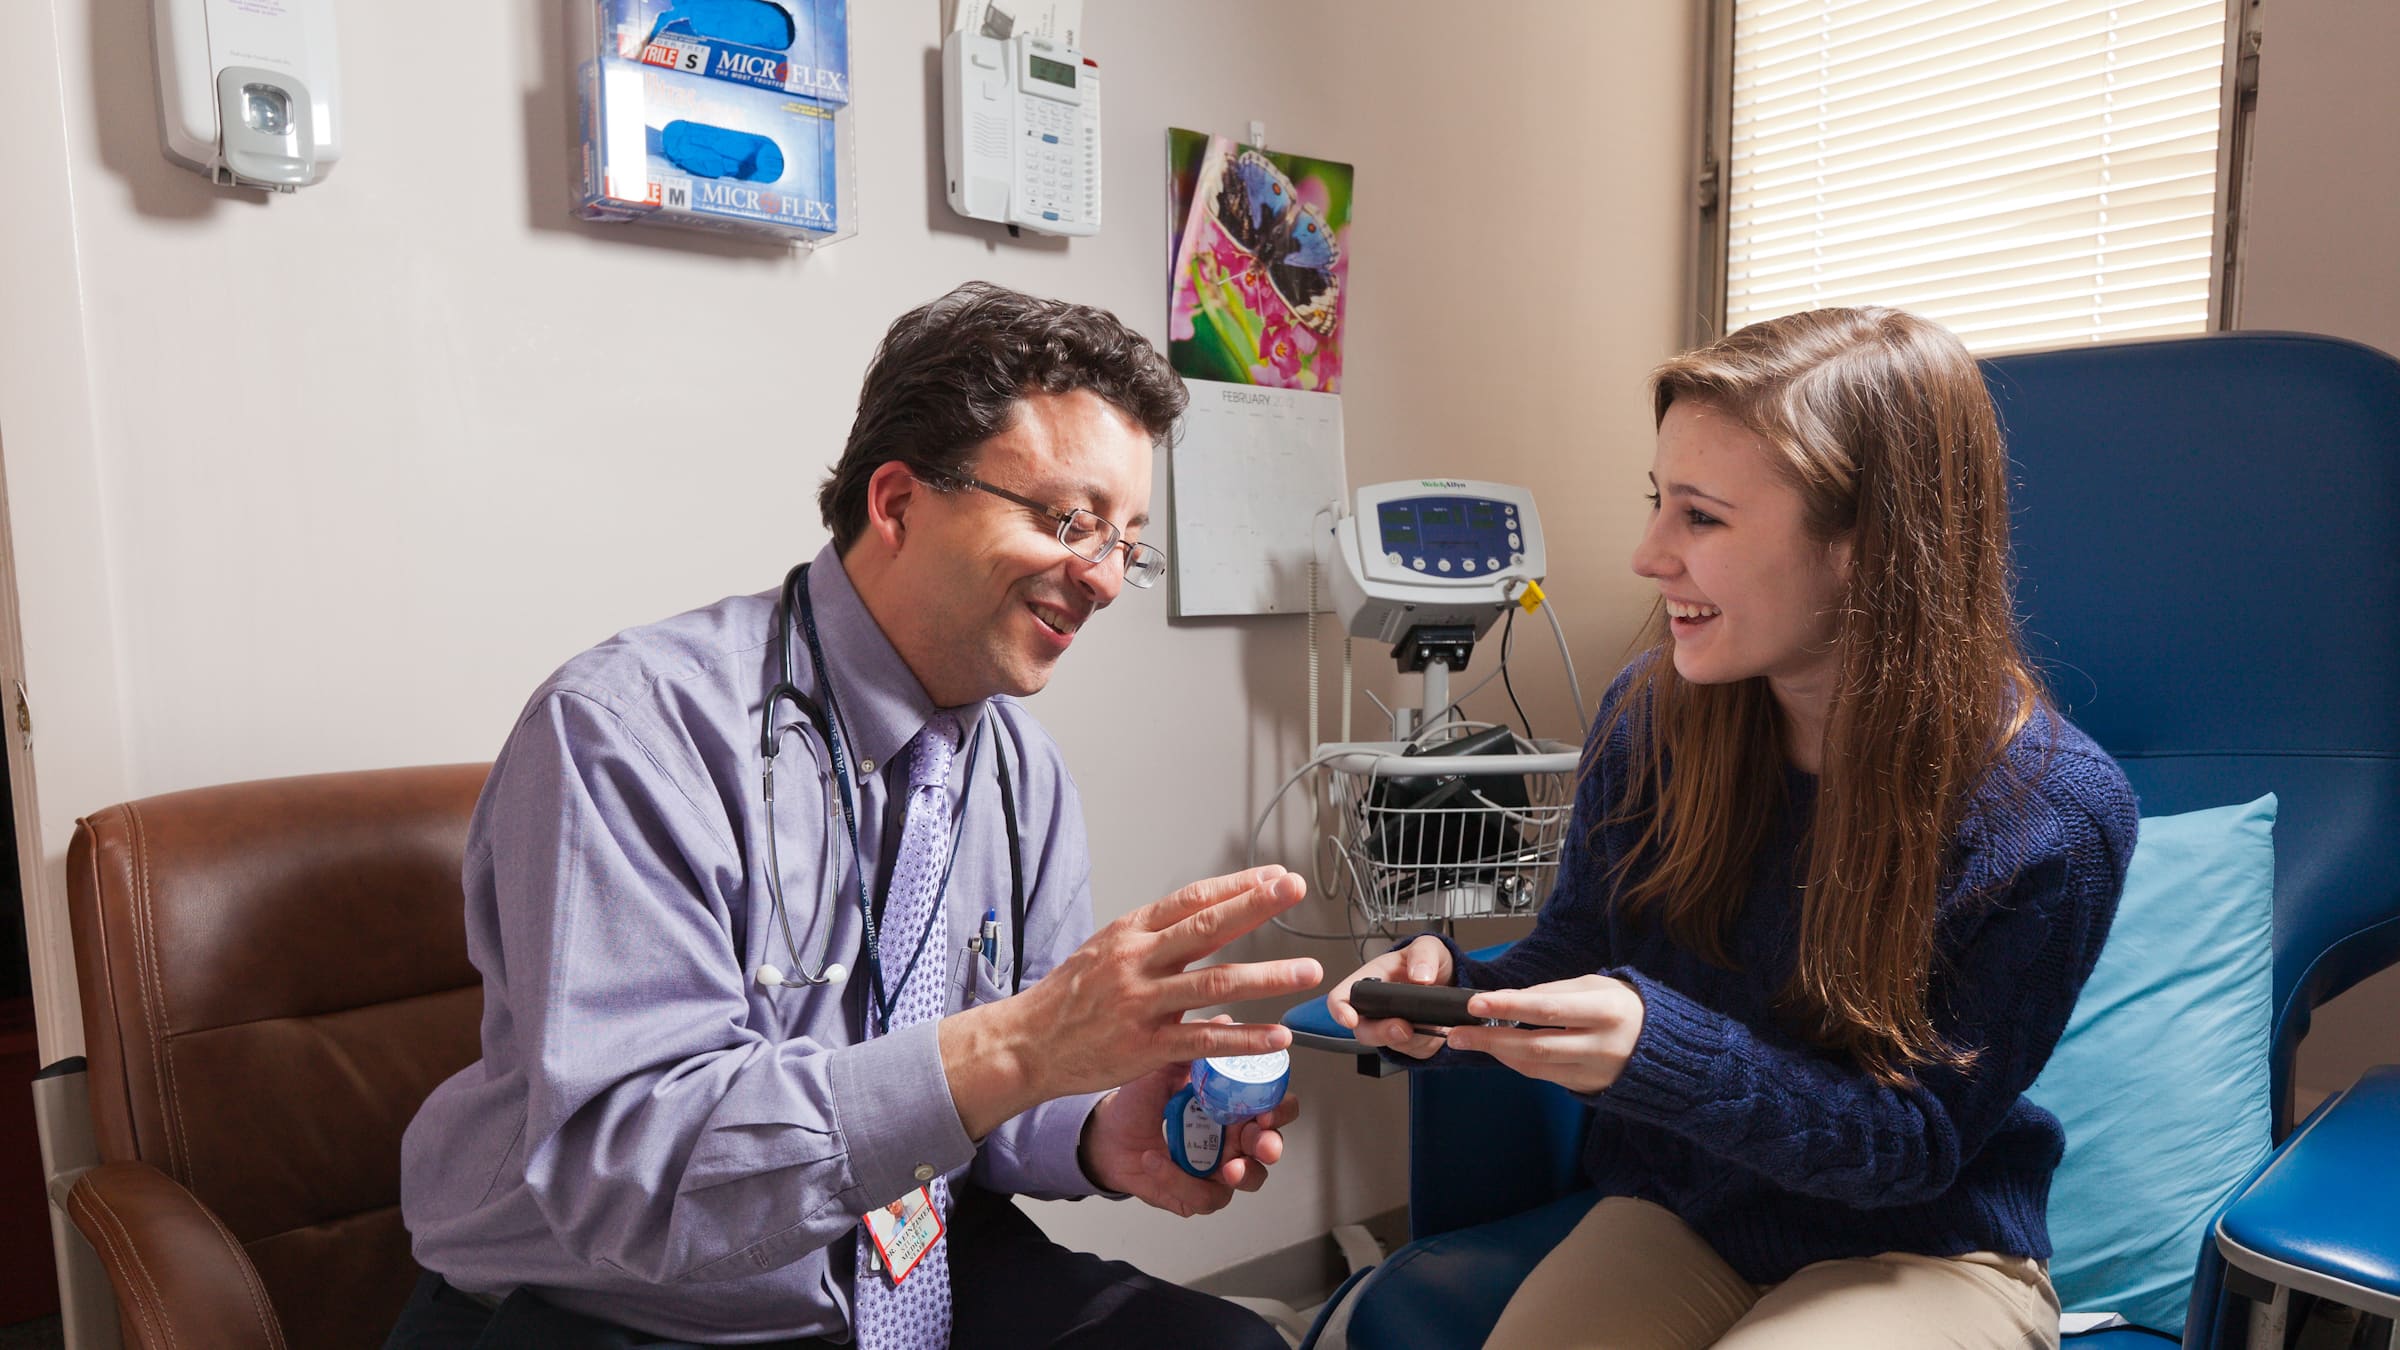 Dr. Stuart Weinzimer explains the new device for managing juvenile diabetes to a young patient.